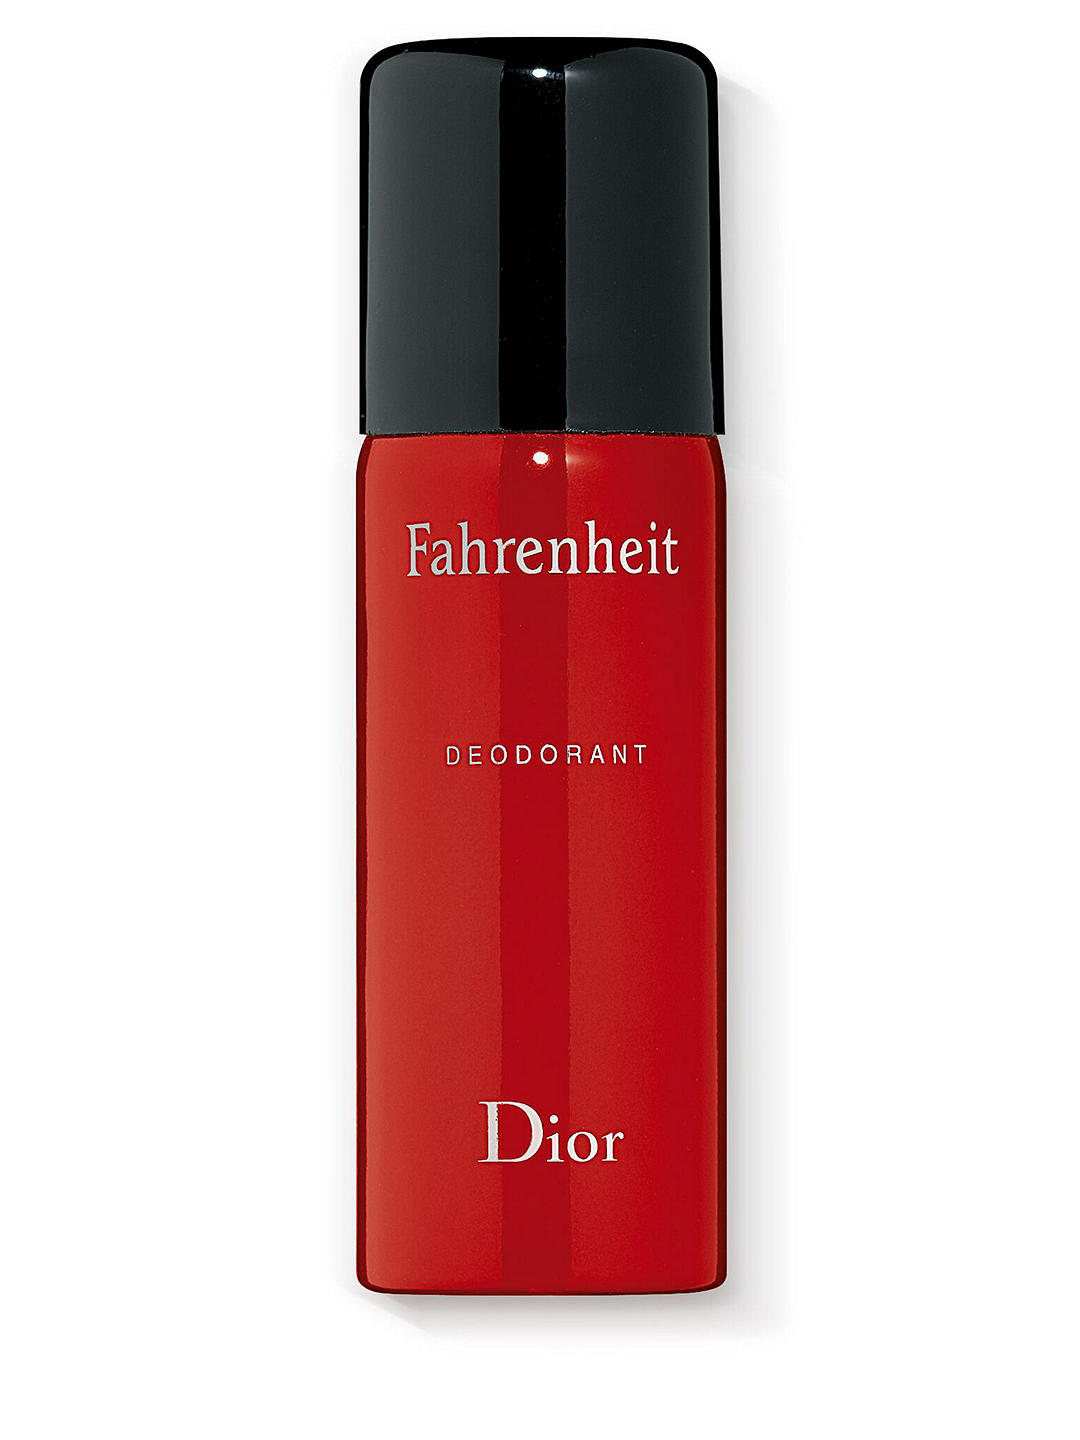 DIOR Fahrenheit Deodorant Spray, 150ml 1